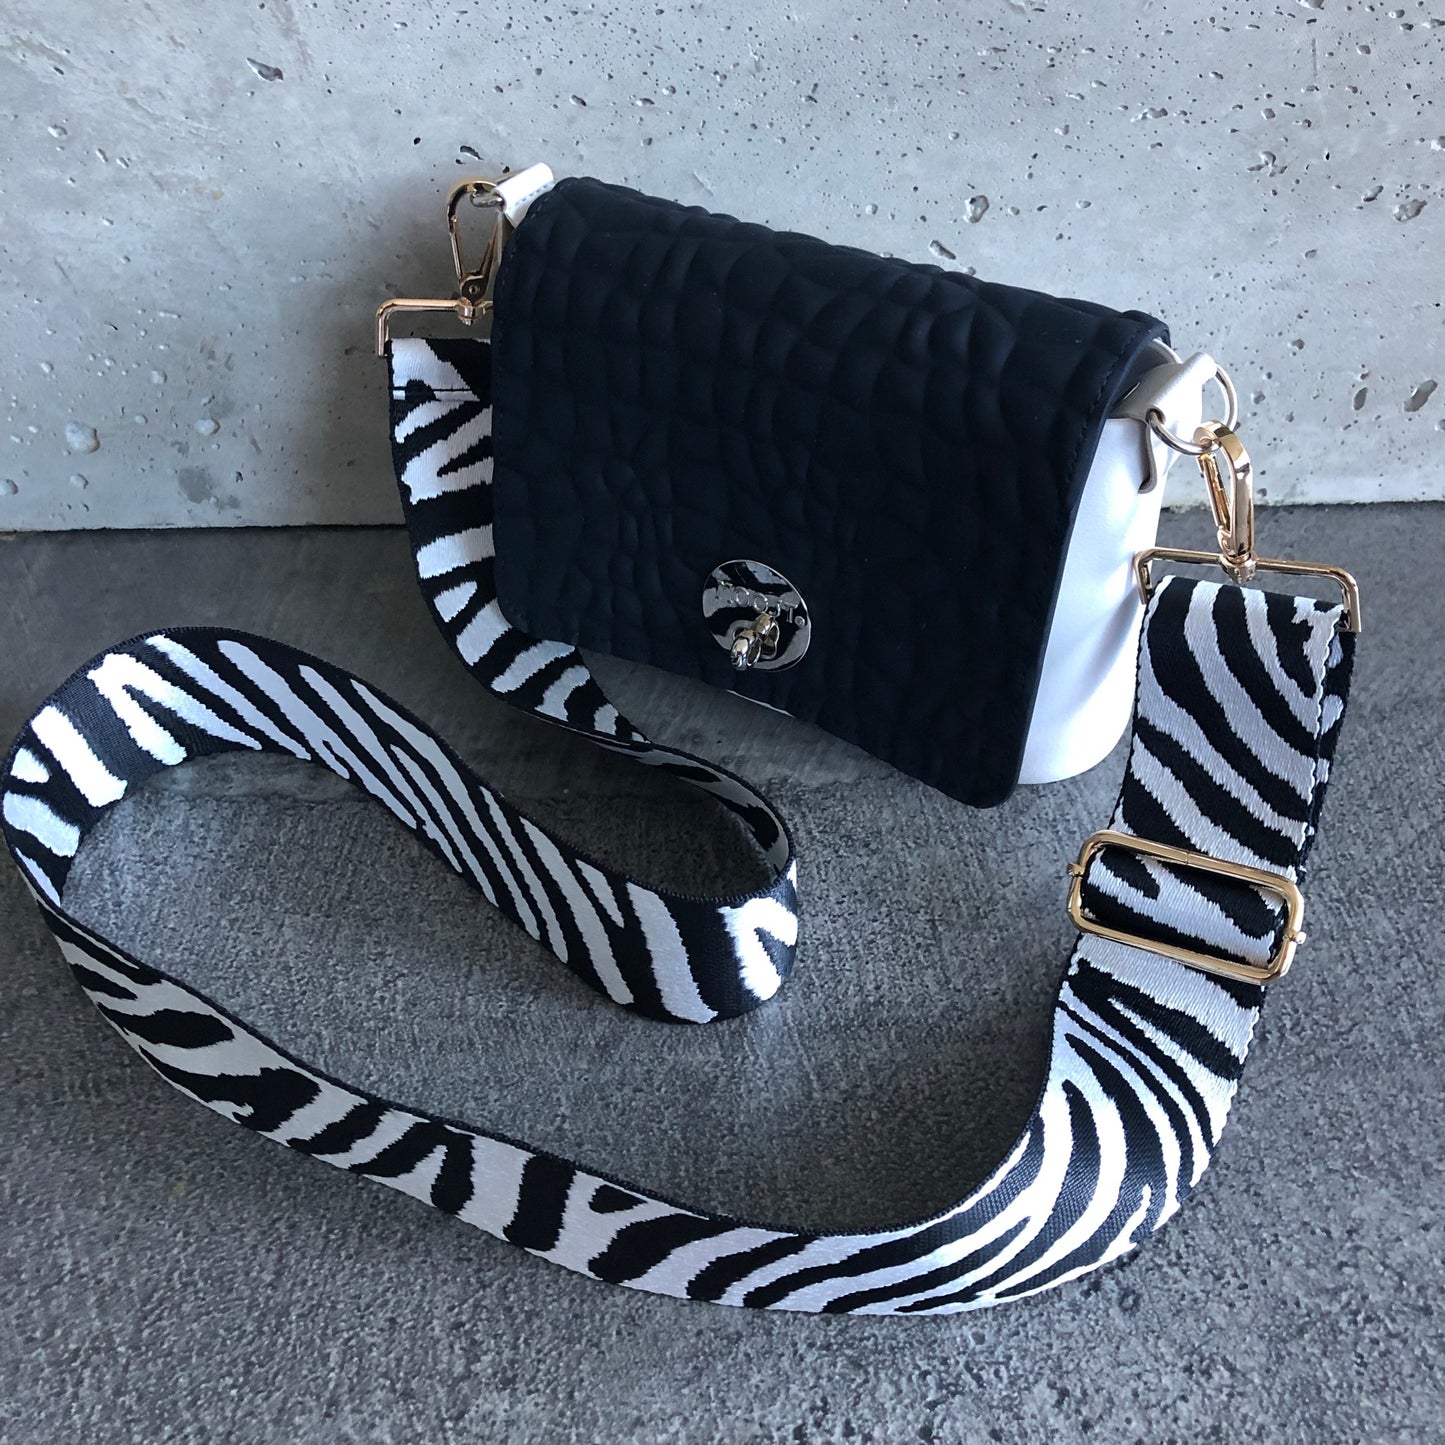 Black on White with Zebra Strap